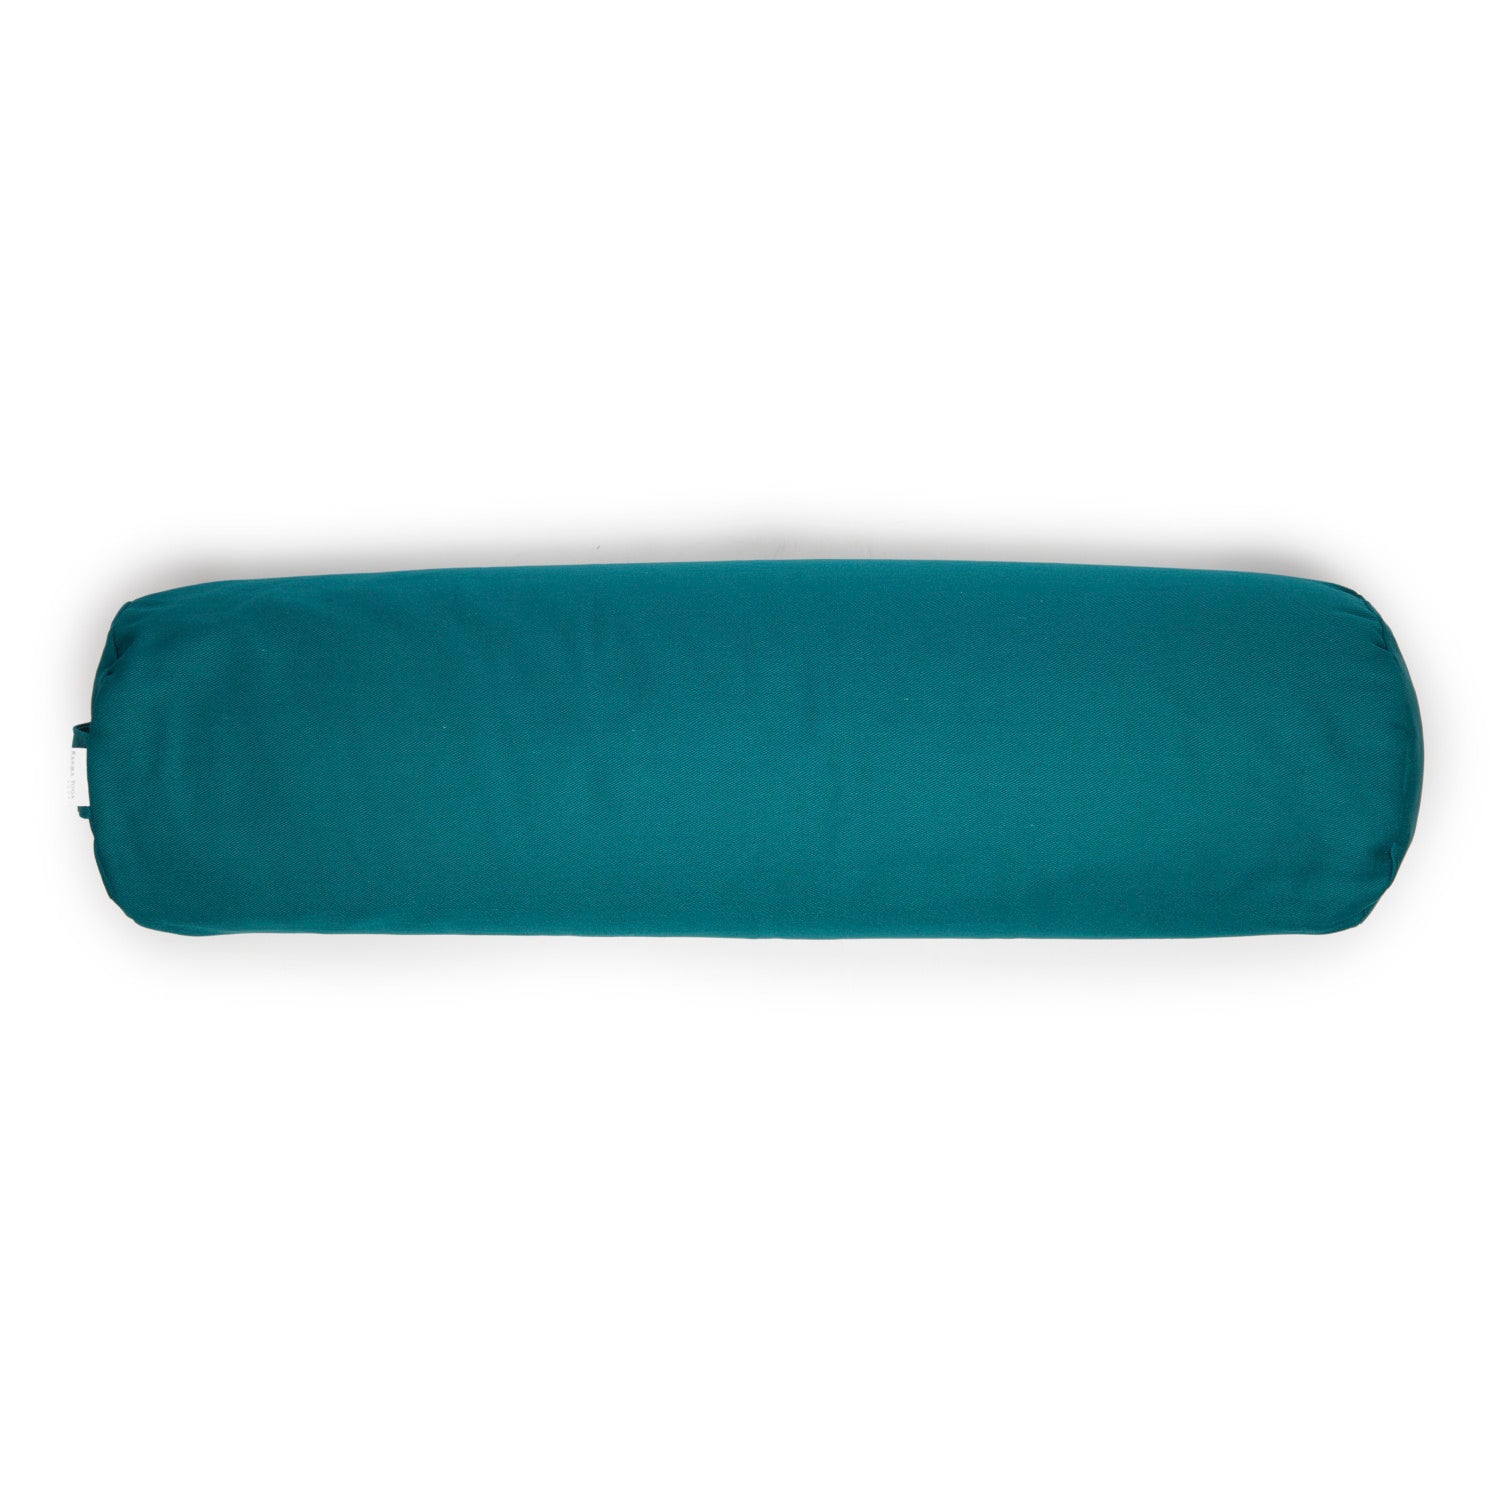 Coussin de méditation Zafu - Carma bleu turquoise